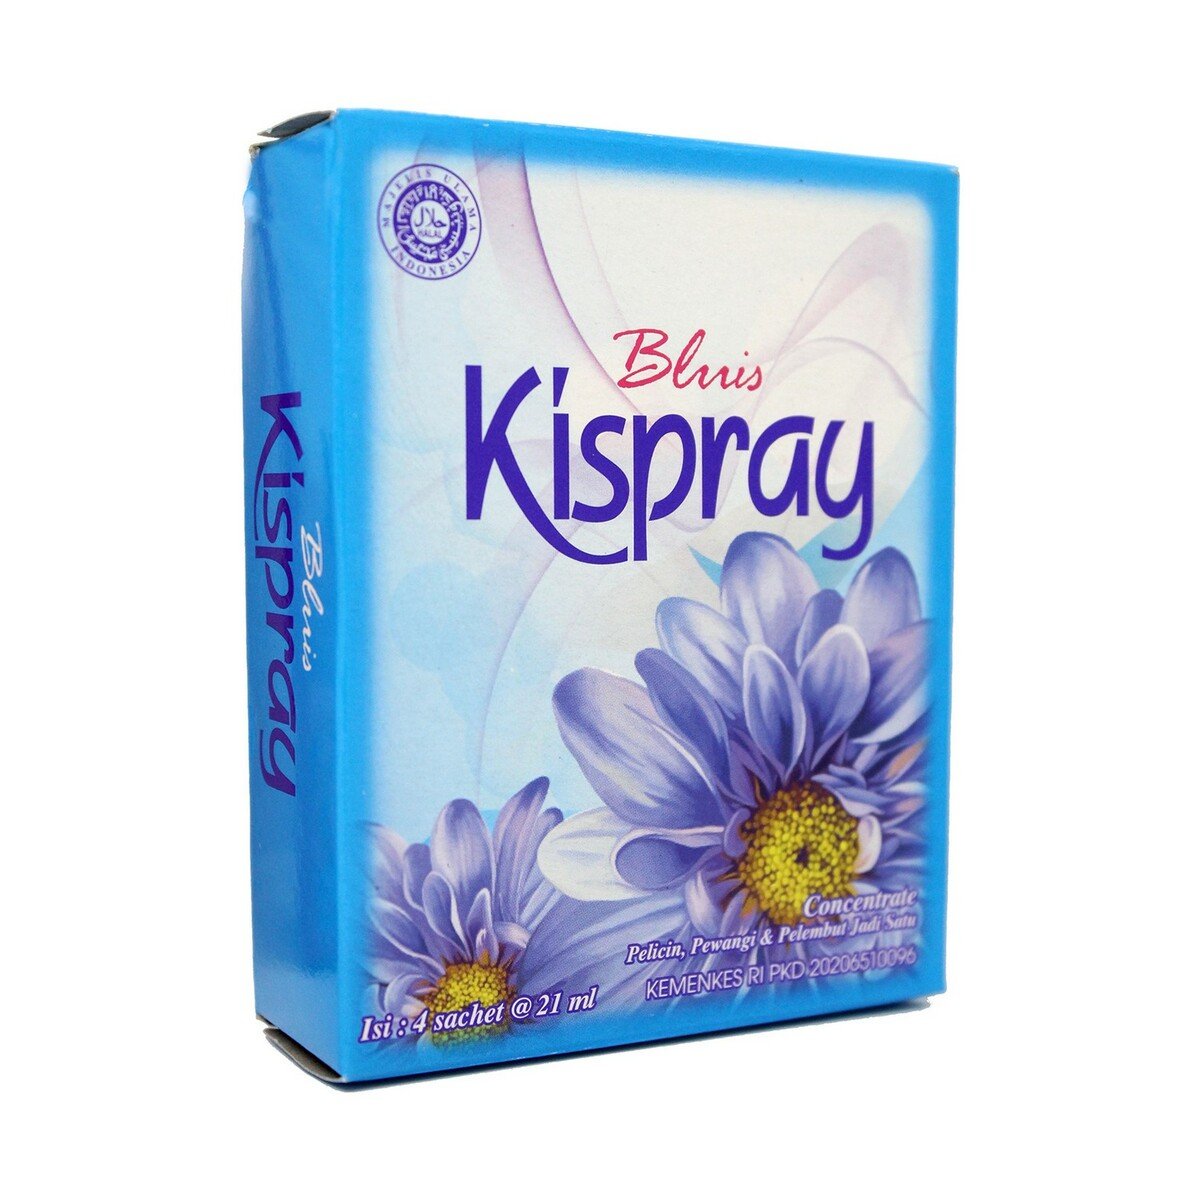 Kispray Dus Bluis 4 x 21ml